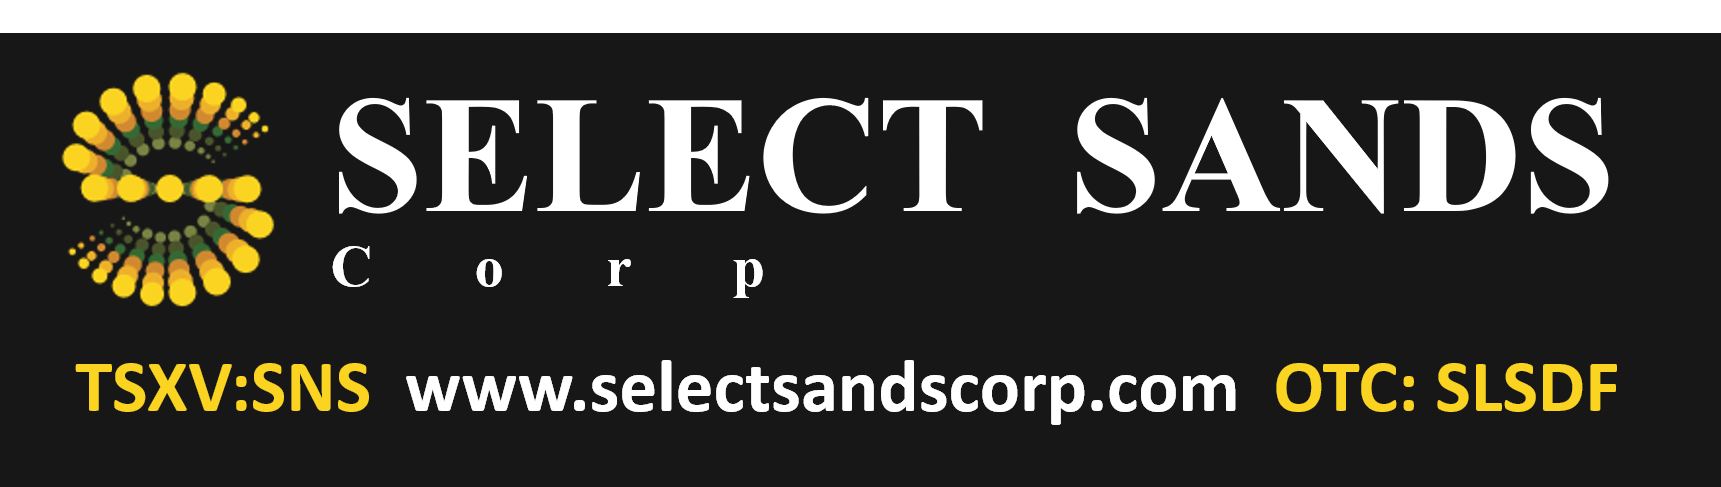 Select Sands Logo.png